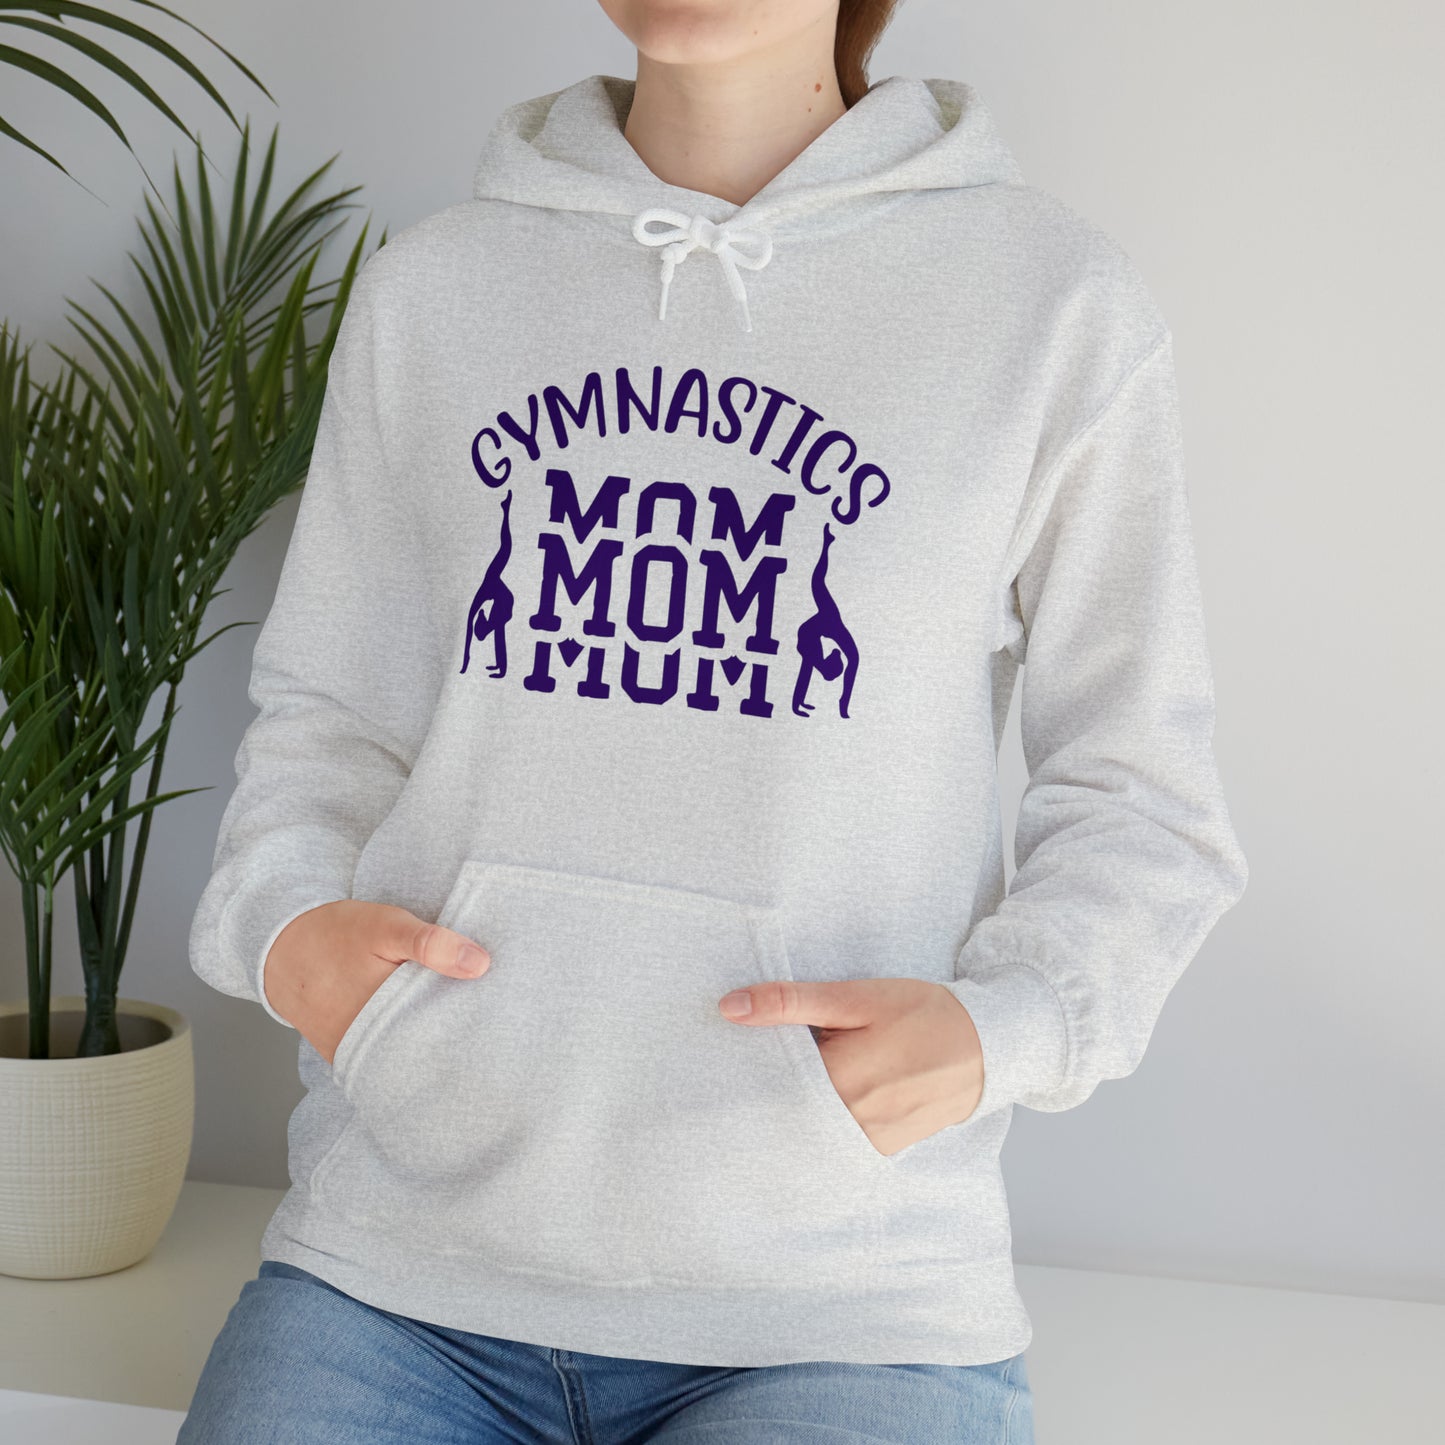 Gymnastics Mom Hoodie, Gymnastics Mom Gift, Sports Mom, Cute Hoodie for Mom, Hooded Sweatshirt